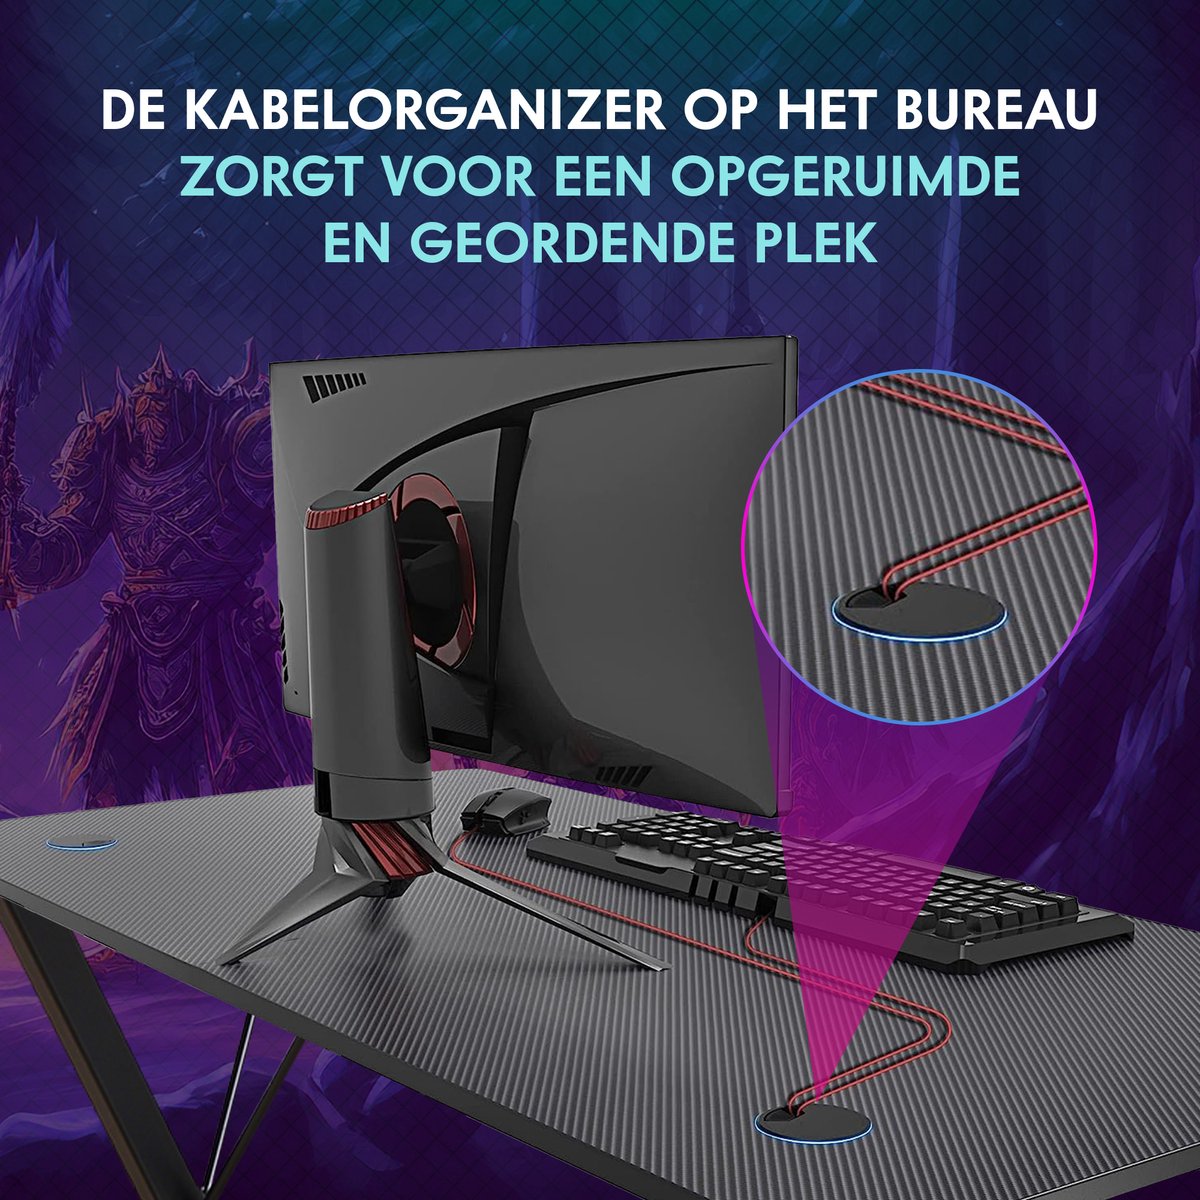 Xergonomic Aion Cyborg Gaming bureau - Koptelefoonhouder, bekerhouder & Kabel organizer - Carbon Fiber Coated Toplaag - Verstelbare poten - D60xB160xH75 cm - Zwart/Rood